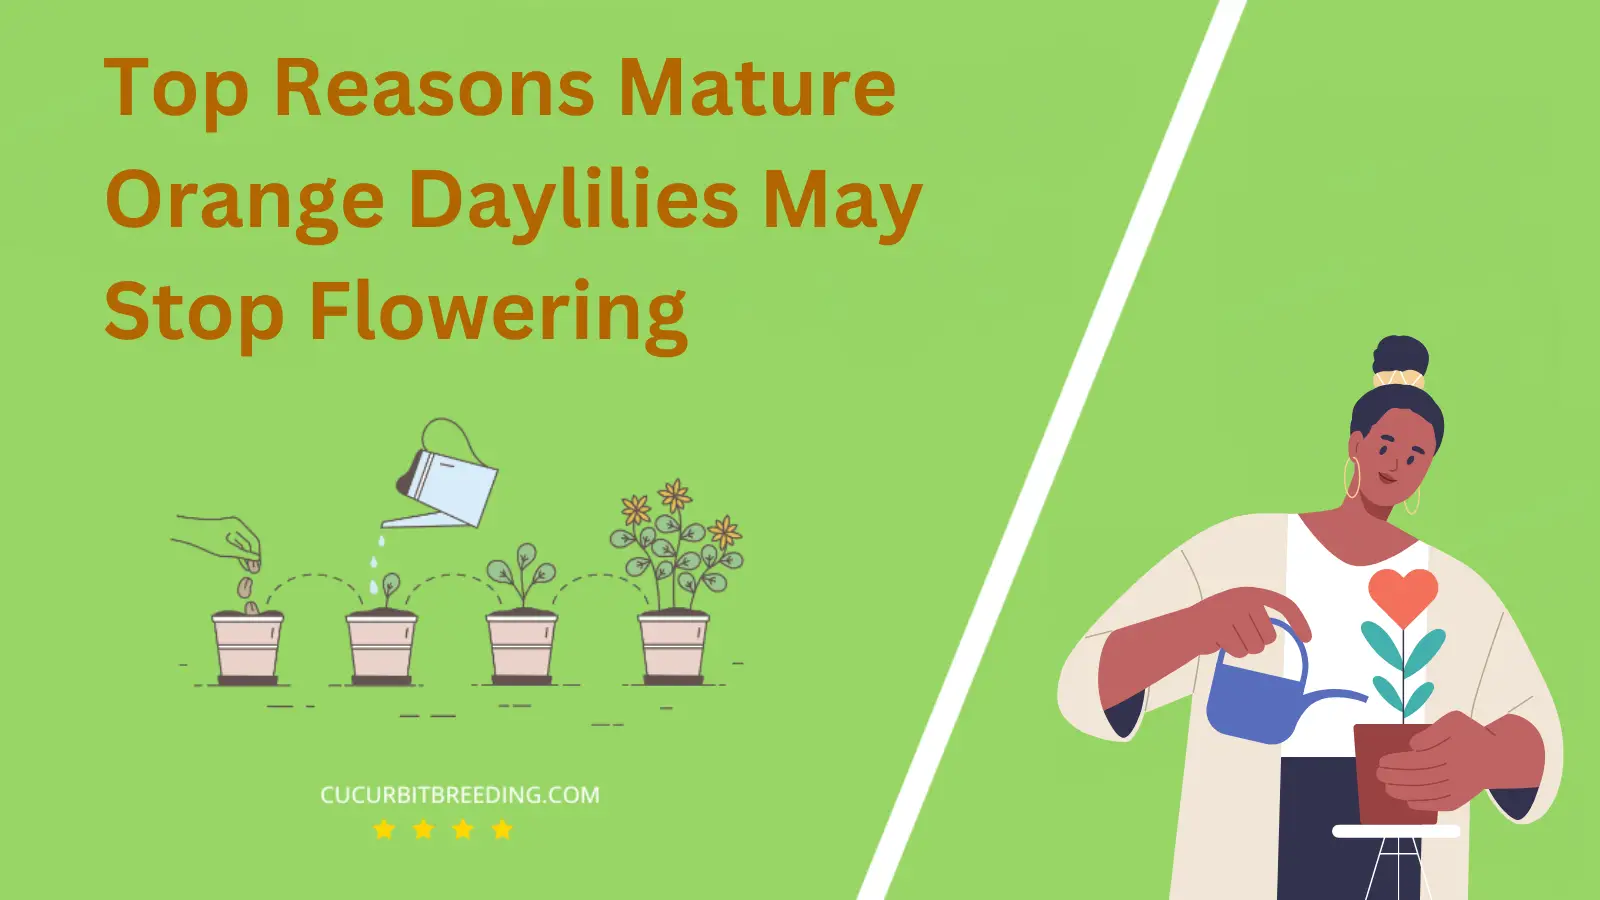 Top Reasons Mature Orange Daylilies May Stop Flowering